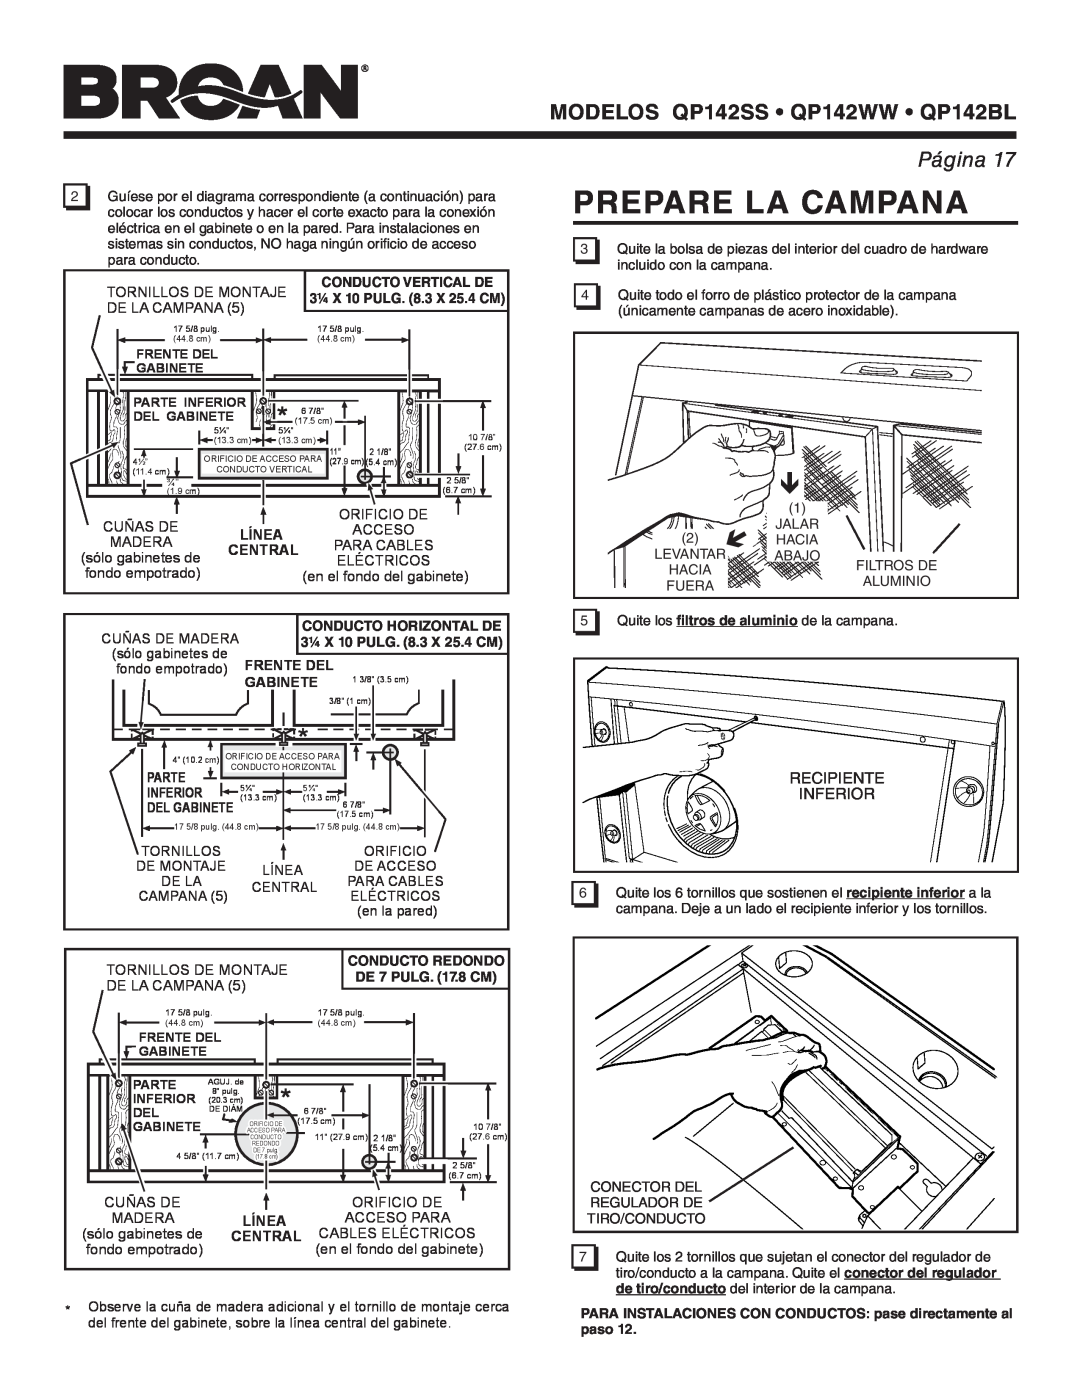 Broan manual Prepare La Campana, MODELOS QP142SS QP142WW QP142BL, Página, Recipiente Inferior 